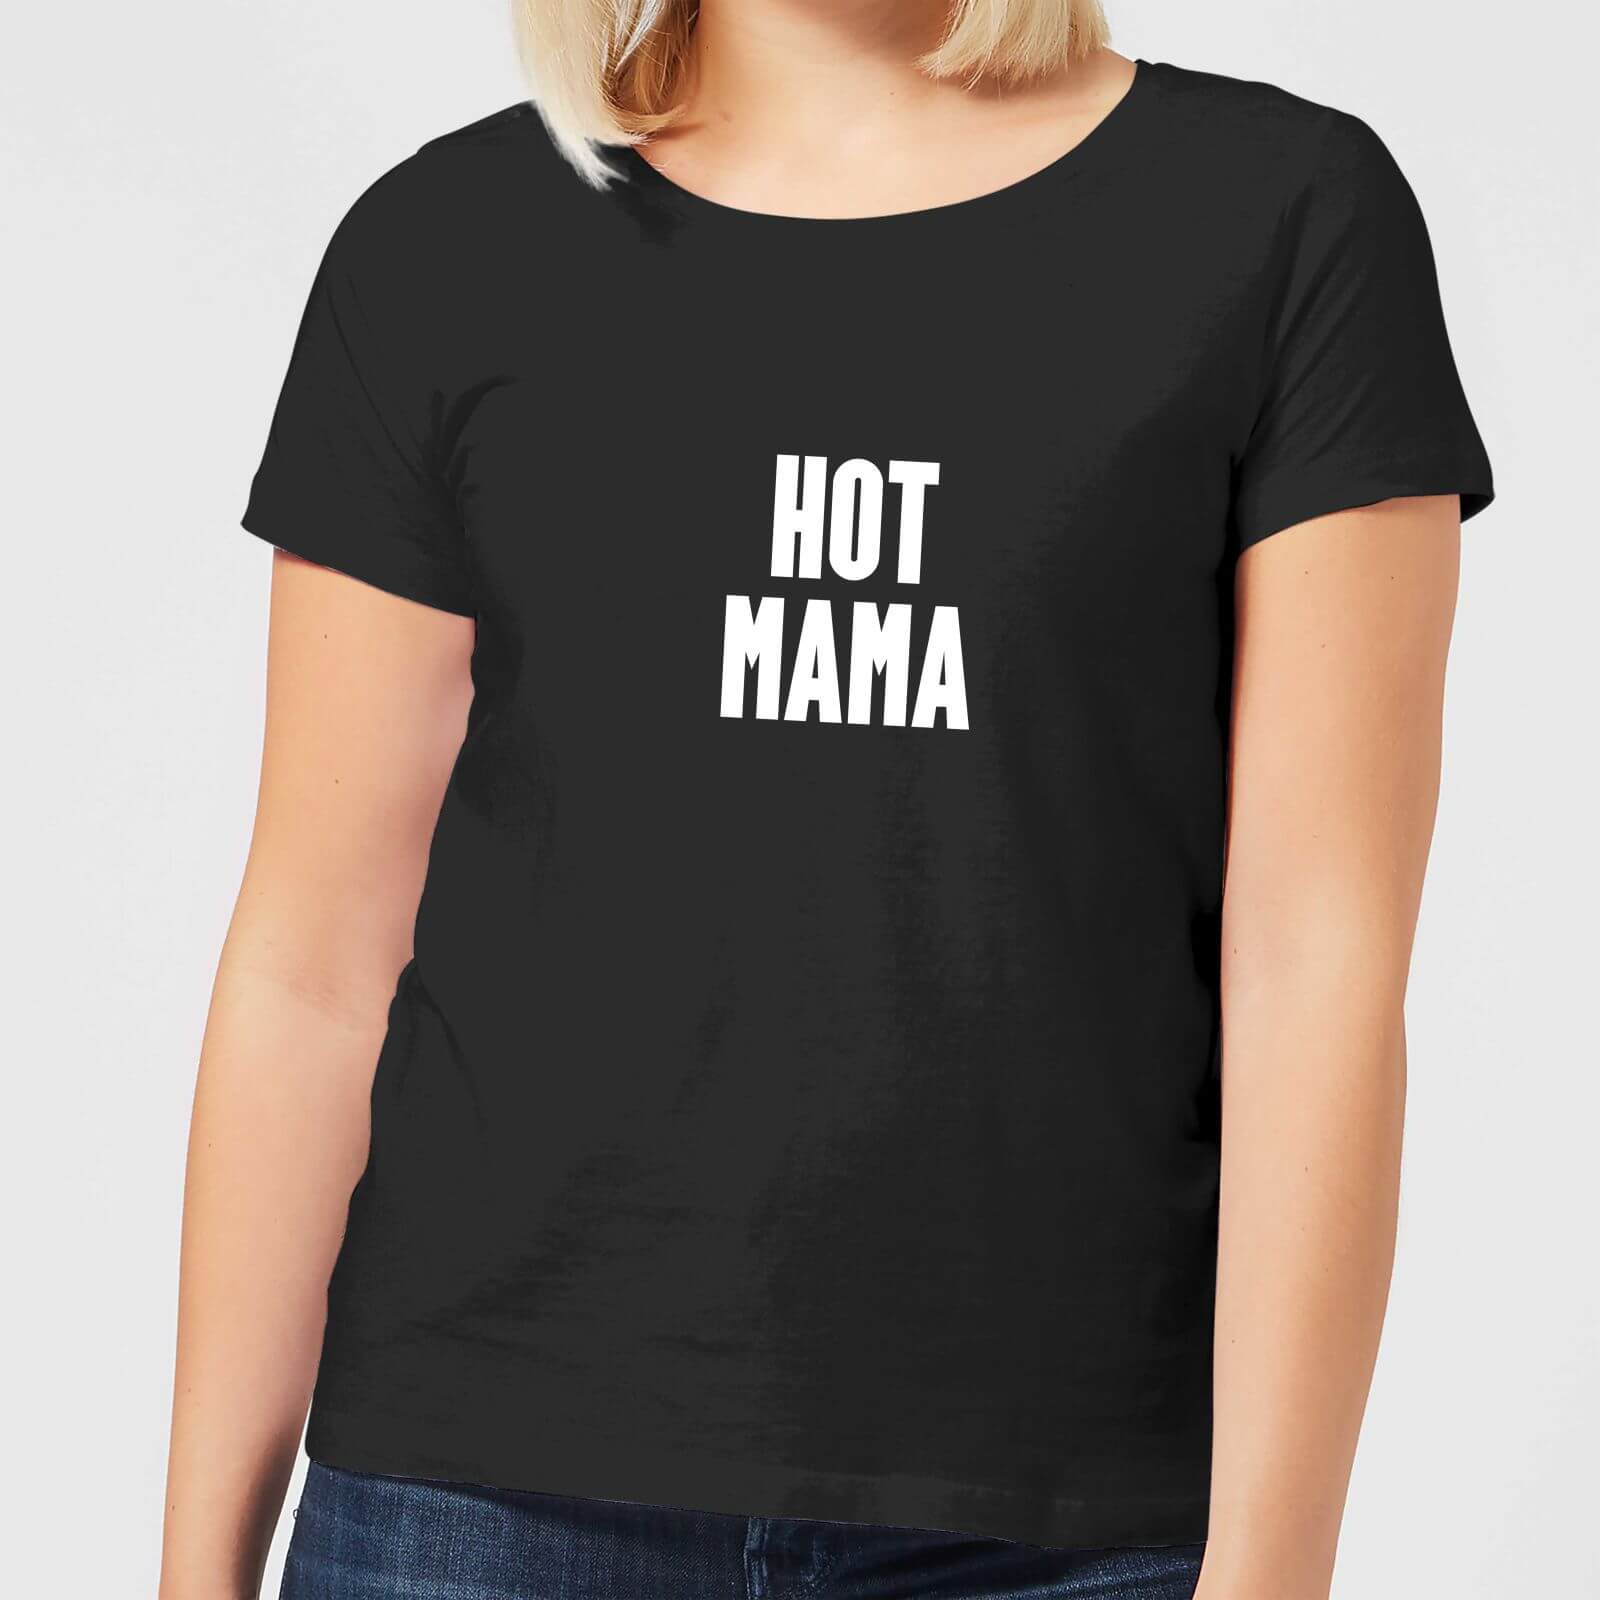 Hot Mama Women's T-Shirt - Black - S - Black